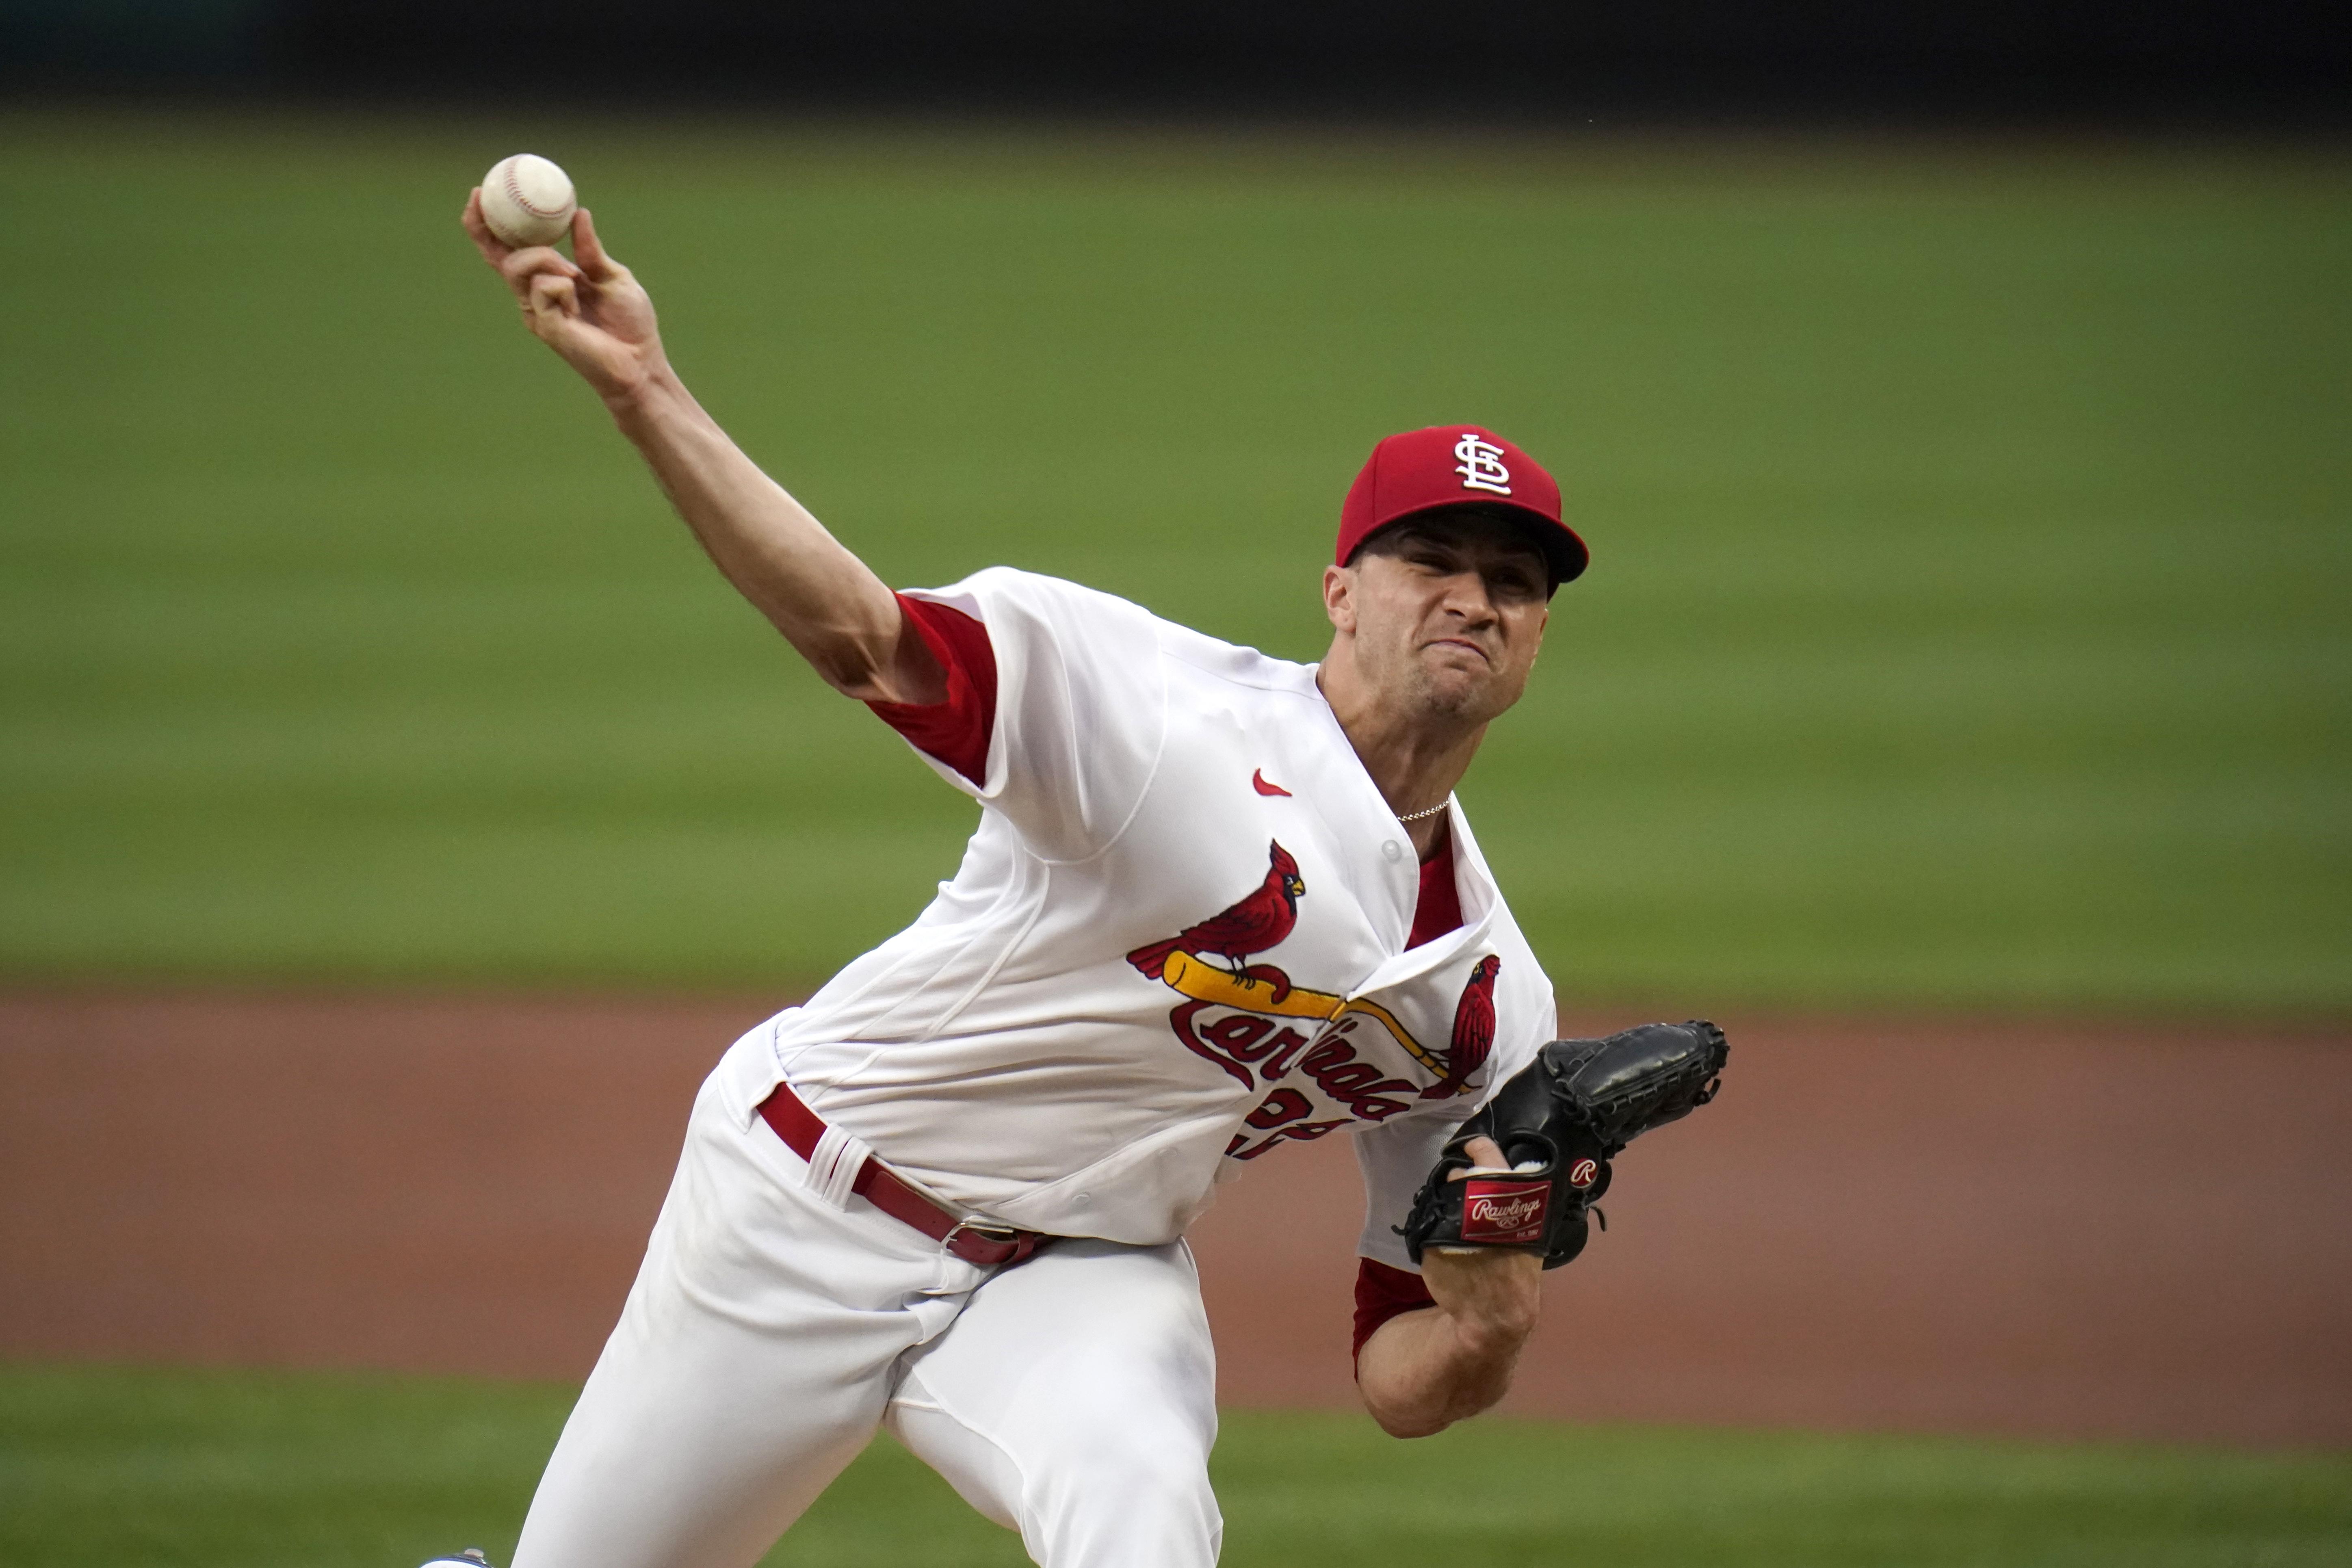 Absolute joke” - MLB pitcher Jack Flaherty targets Tampa Bay Rays